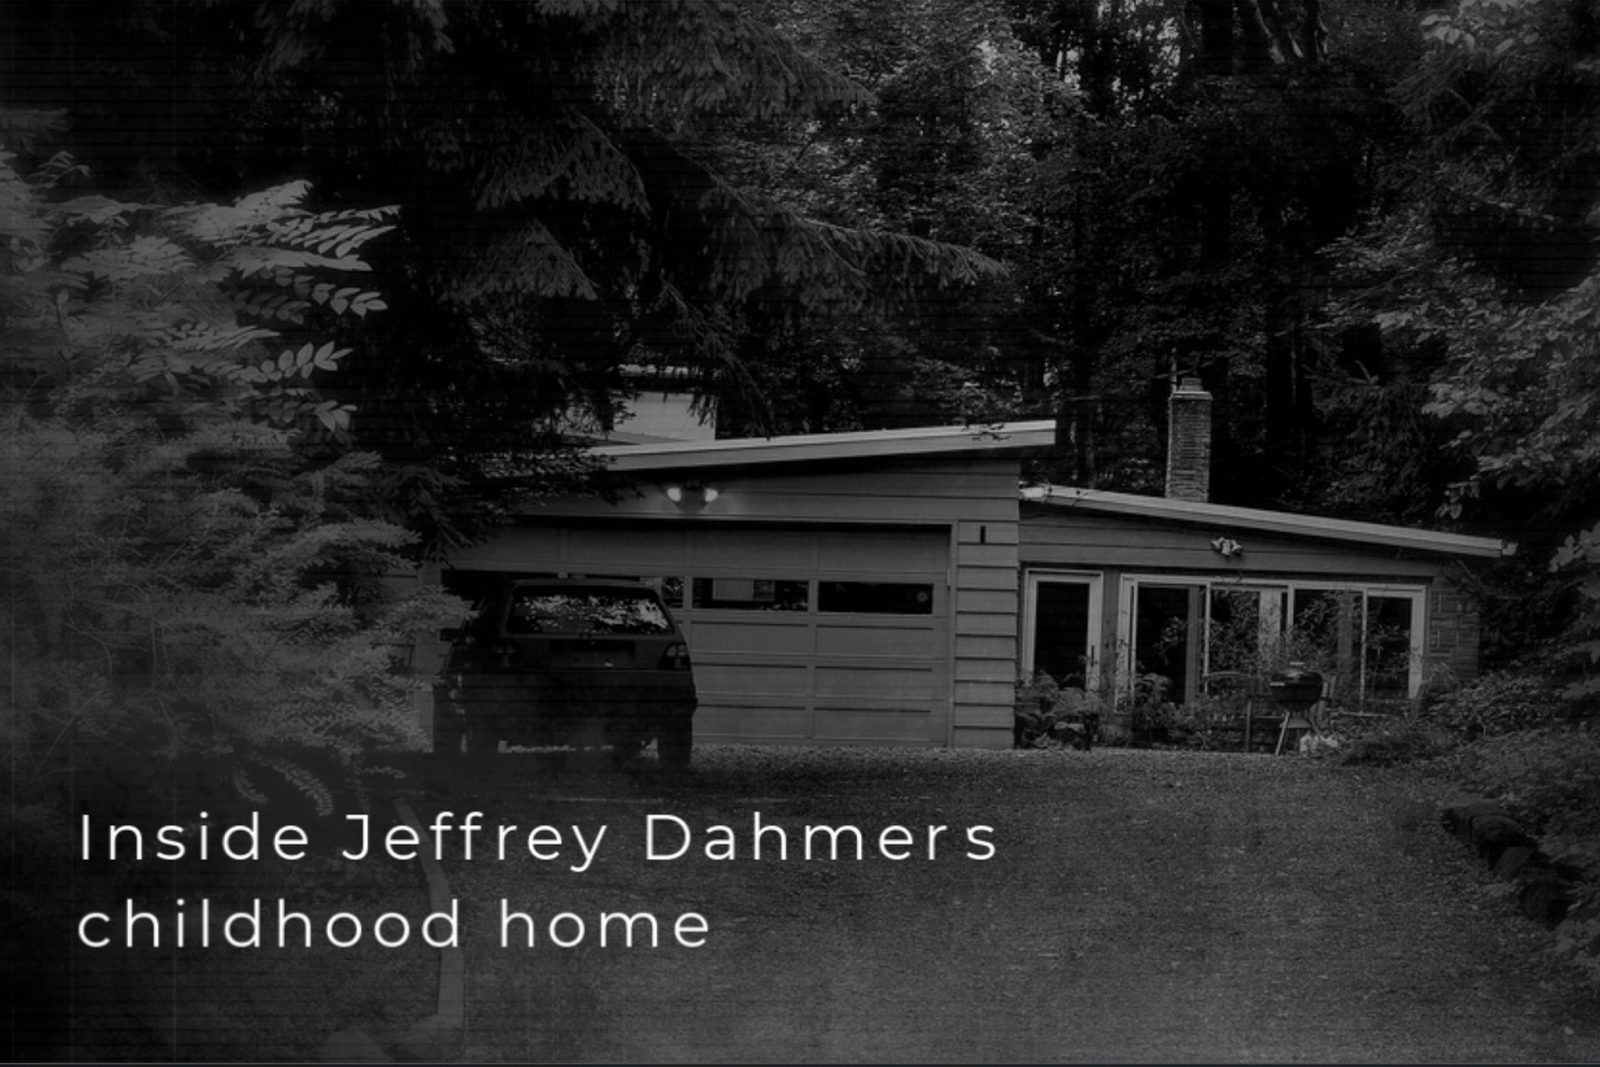 Inside Jeffrey Dahmer's childhood home by Edene music